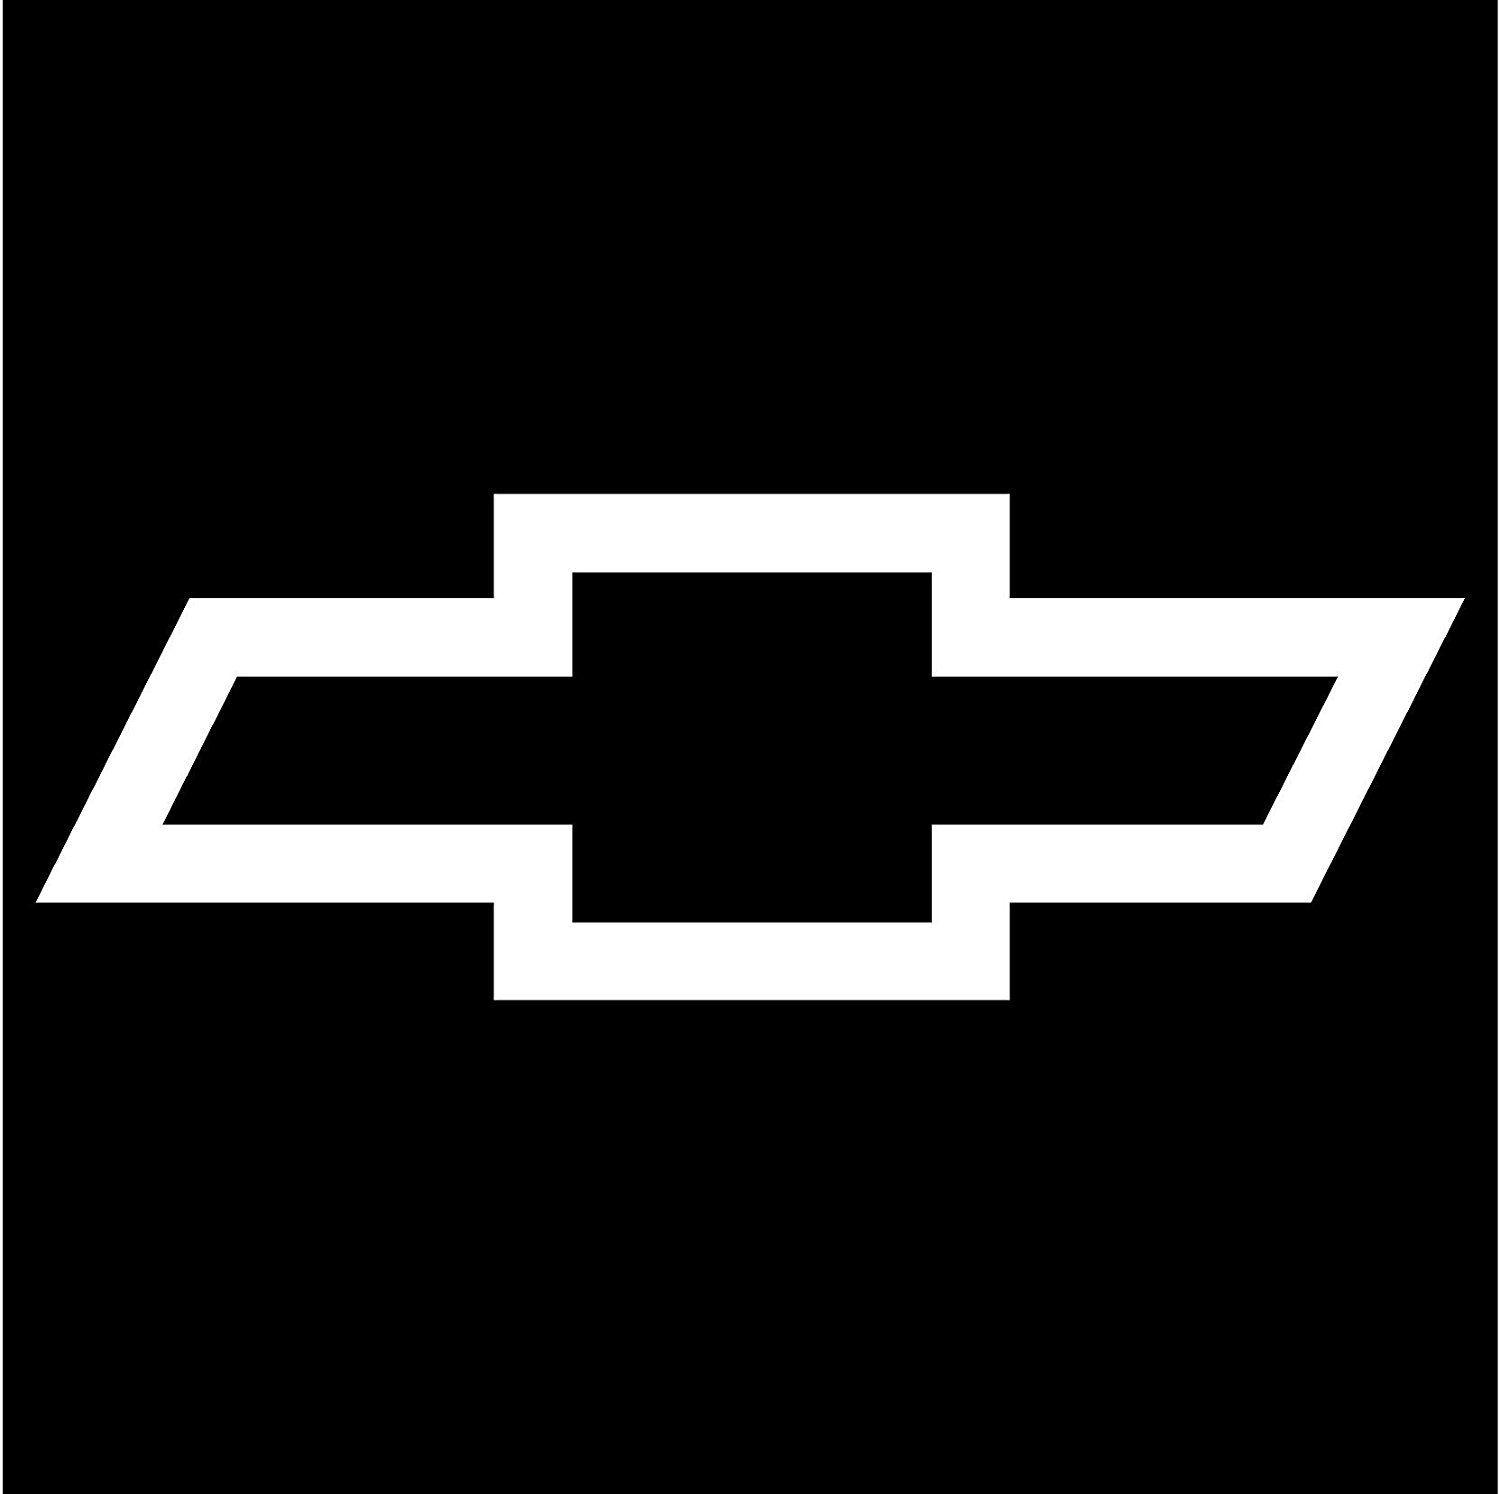 Chevy Bowtie Logo Decal